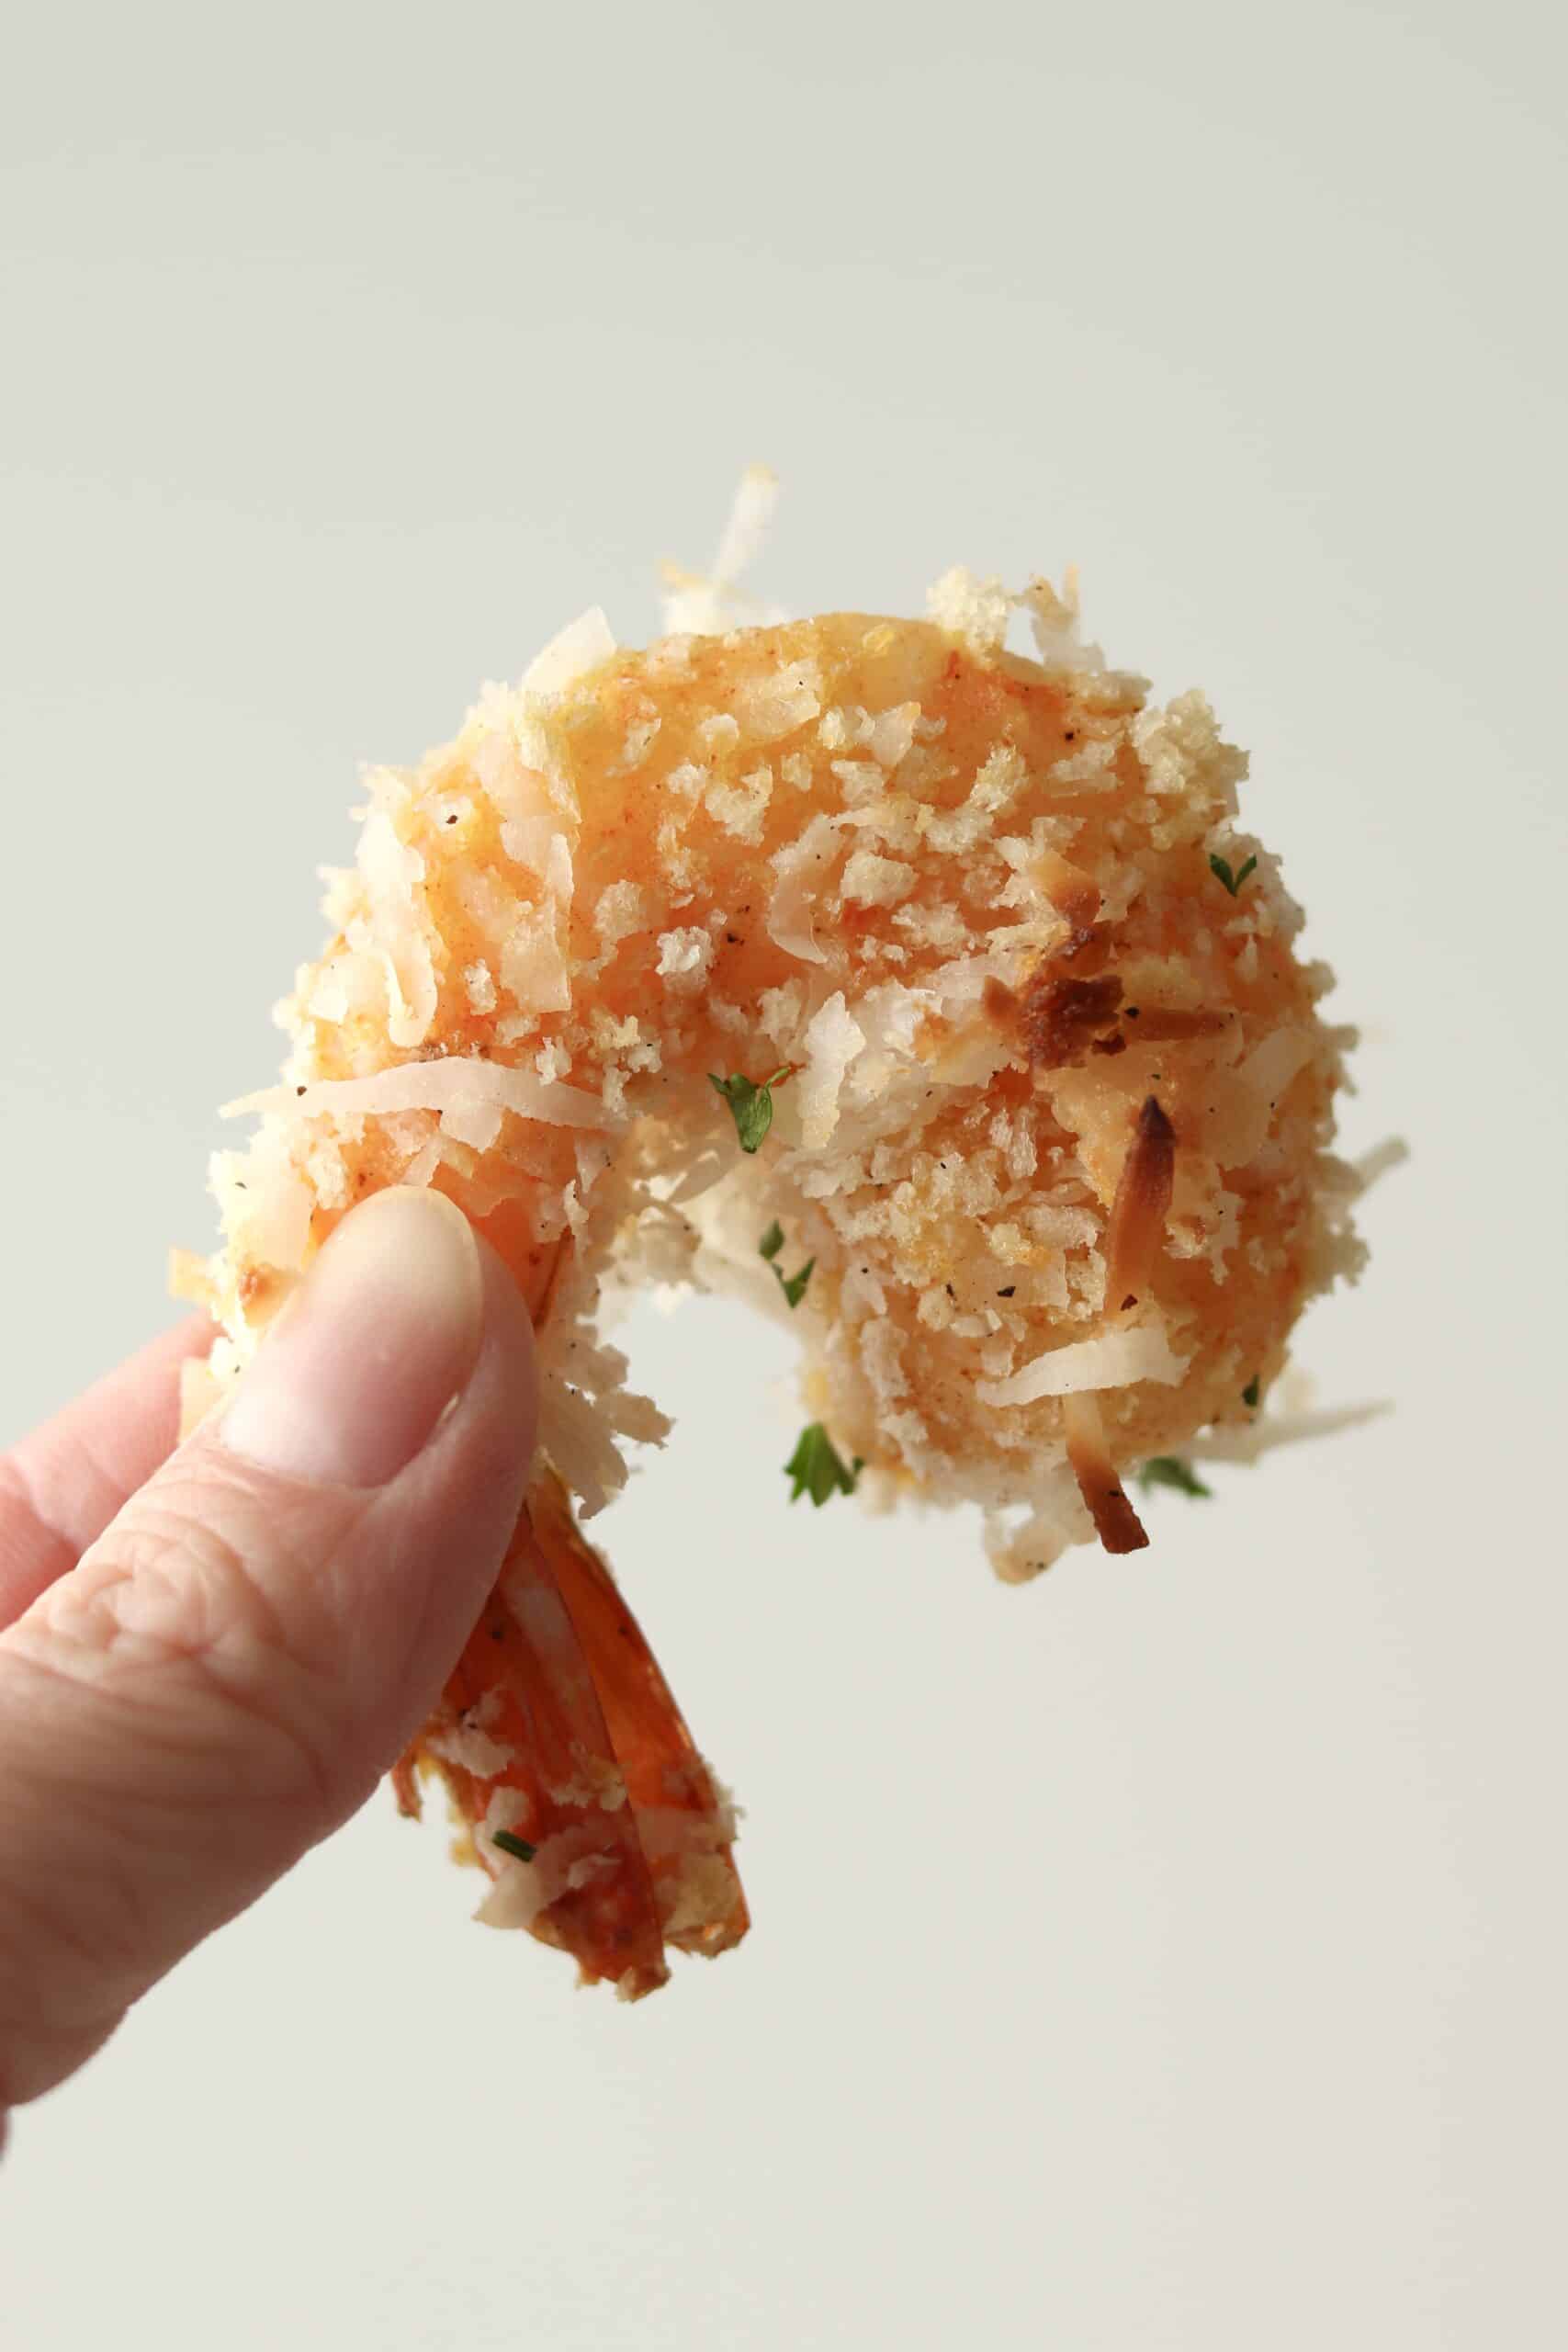 hand holding up a coconut shrimp